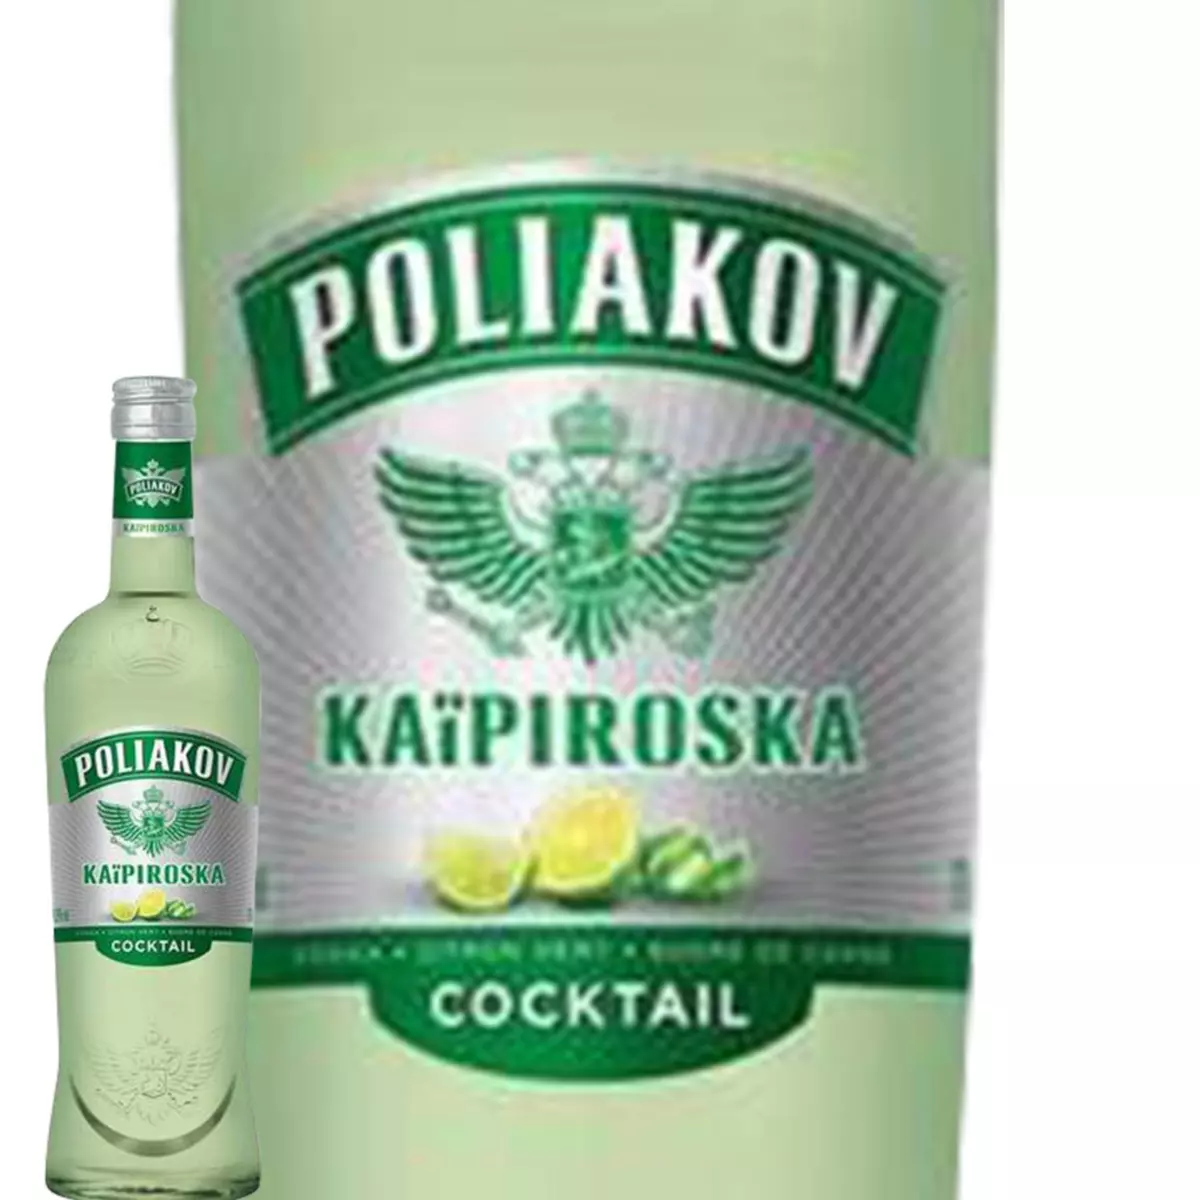 Poliakov Vodka Kaipiroska 14.9%